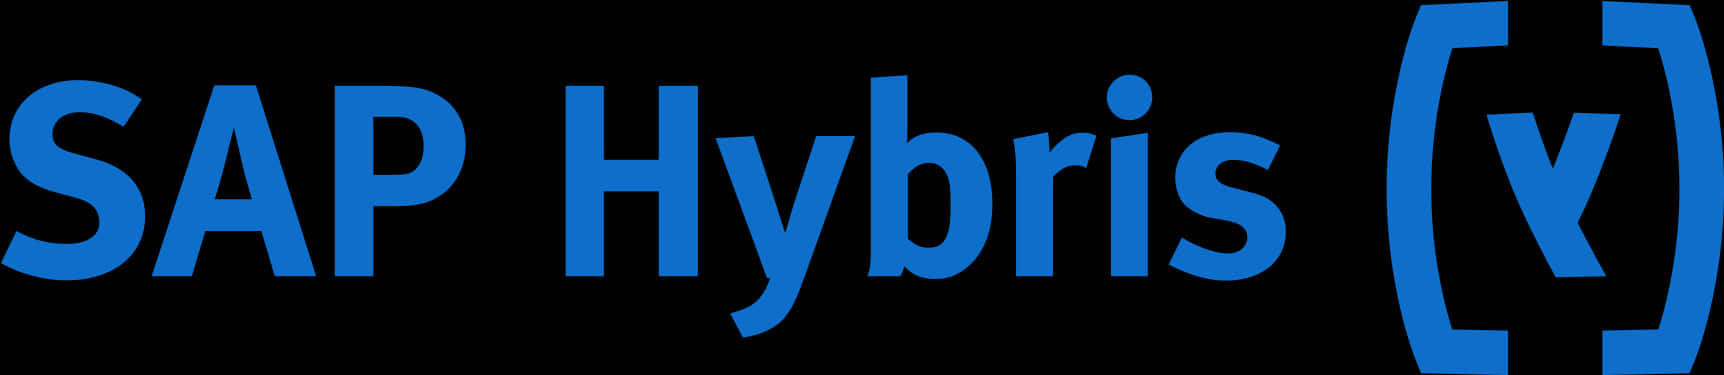 S A P Hybris Logo Blue Background PNG image